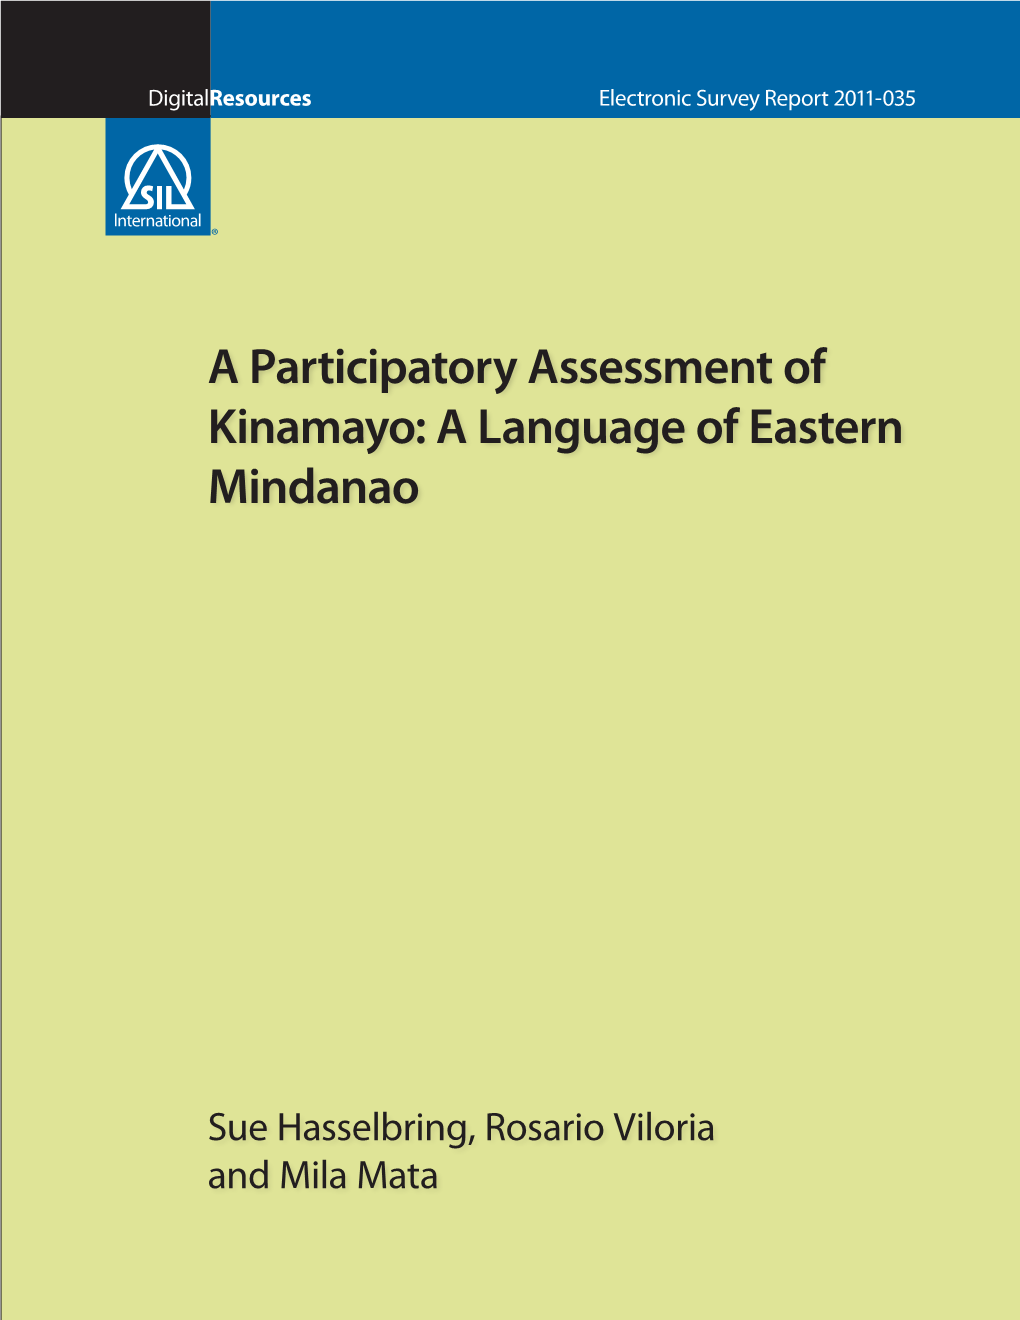 A Language of Eastern Mindanao